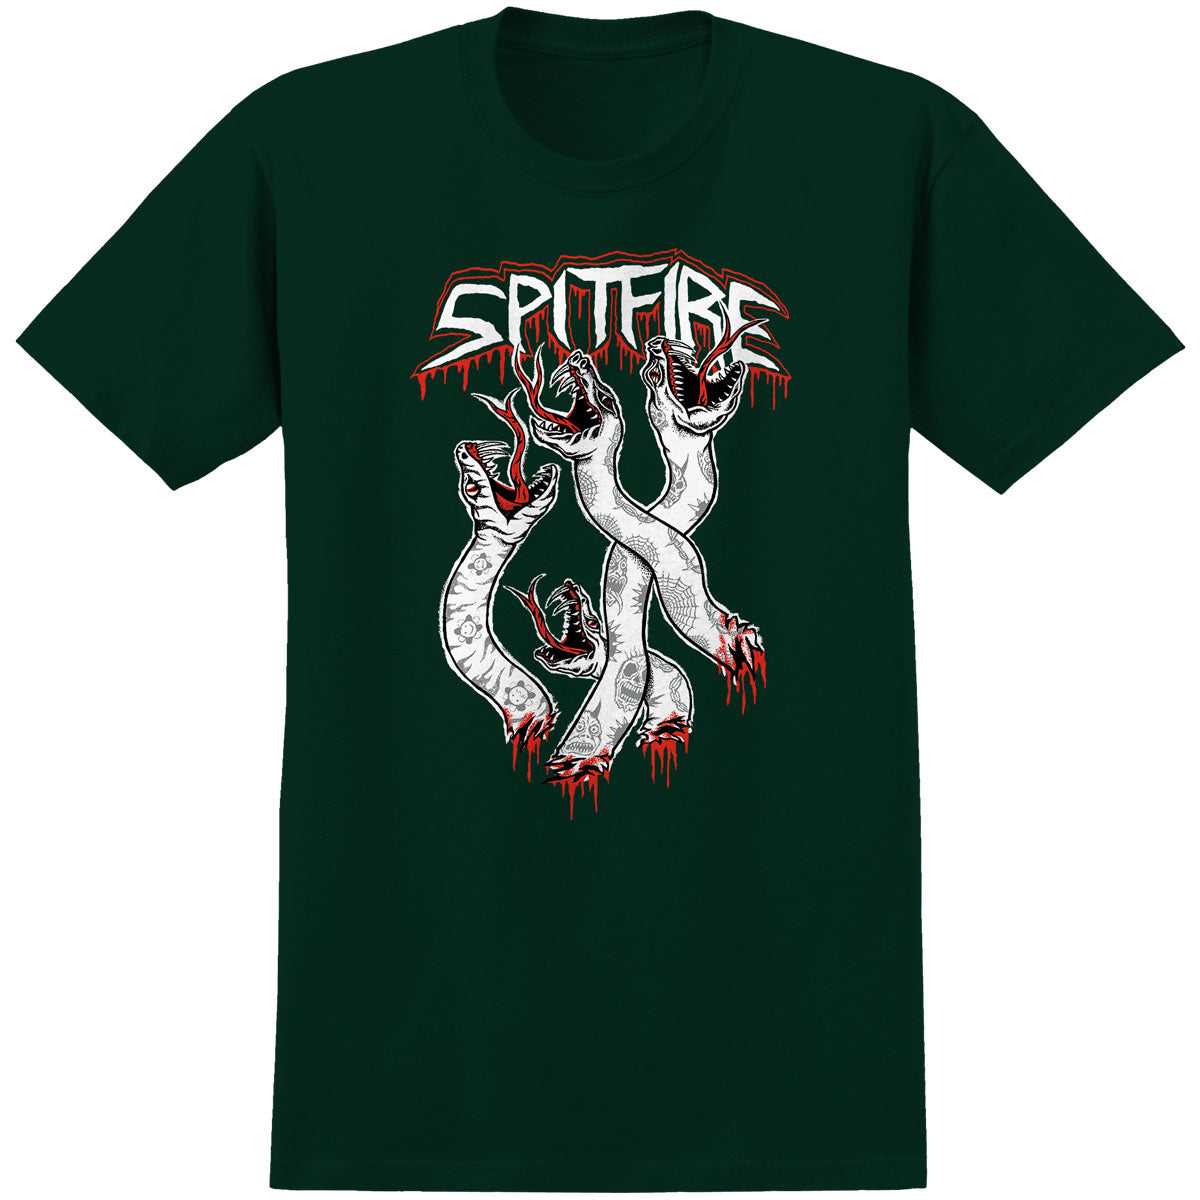 Spitfire Venom T-Shirt - Forest Green image 1